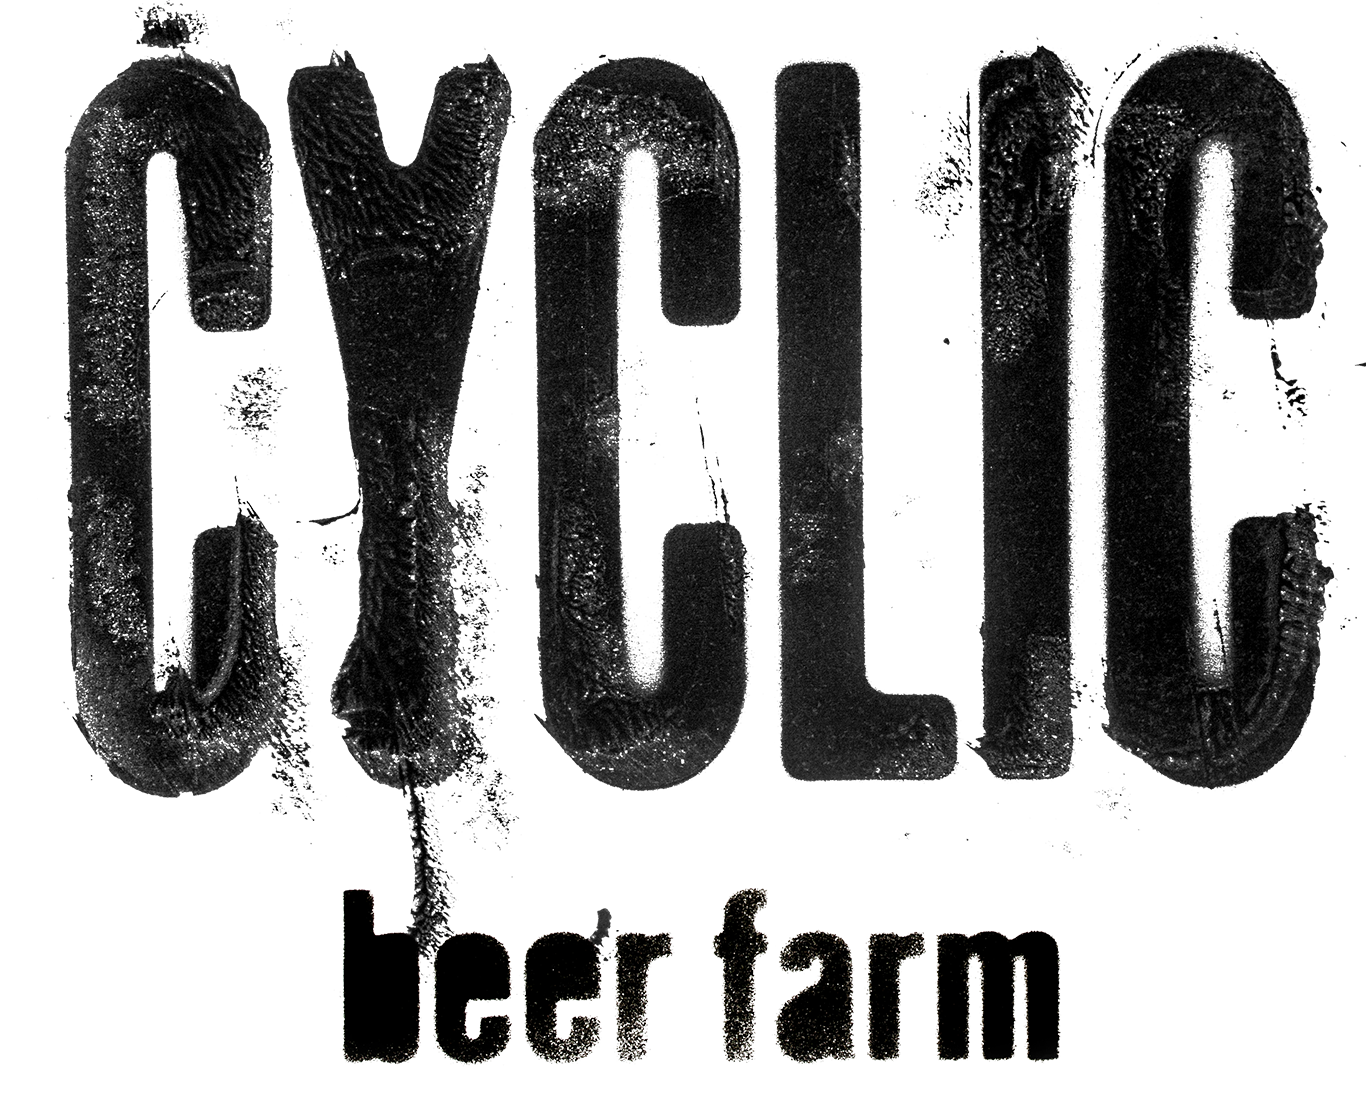 Cyclic Beer Farm